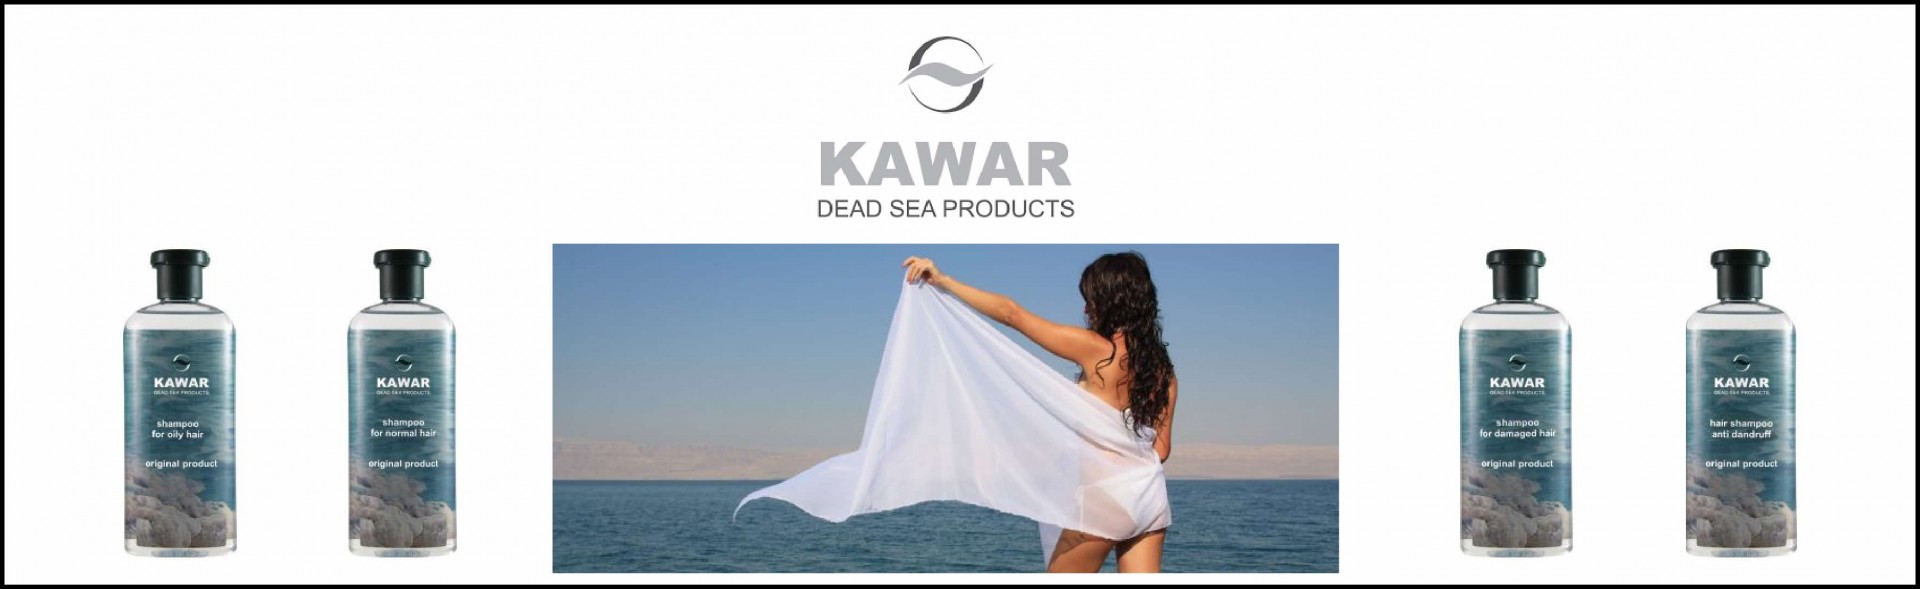 Professionalna vlasova kozmetika KAWAR, kozmetika z mrtveho mora